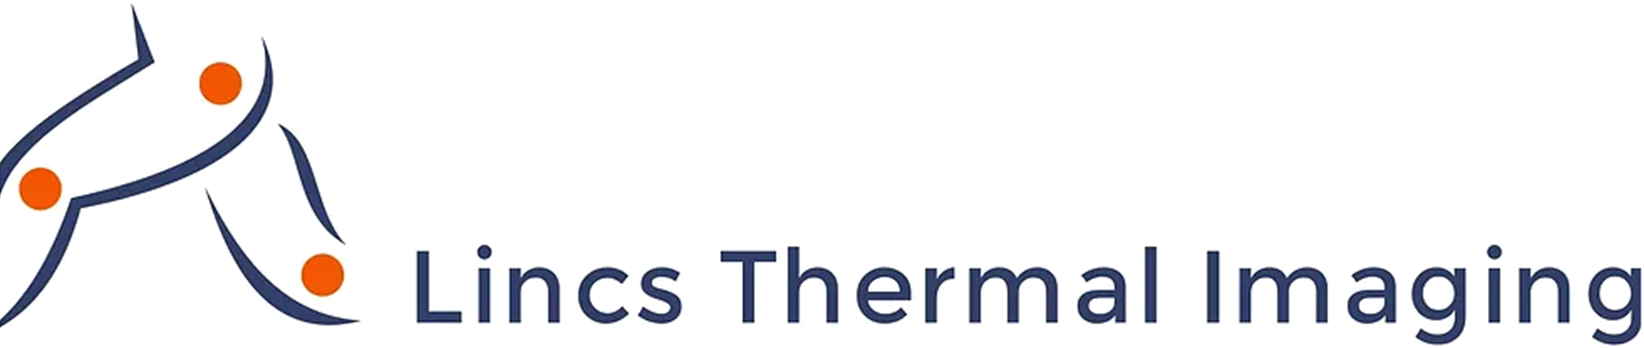 Lincs Thermal Imaging Logo by WA Designs